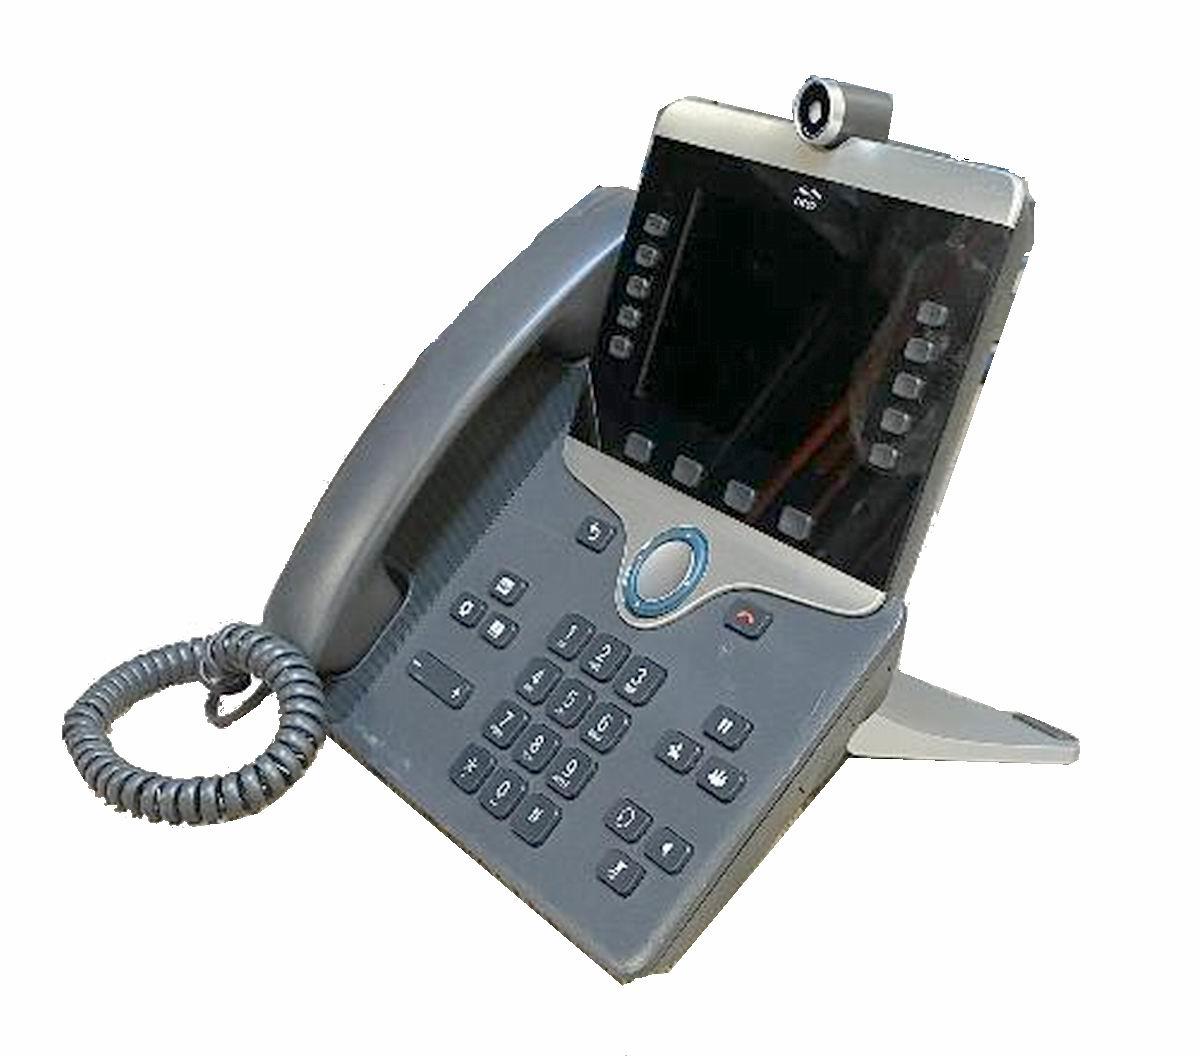 Cisco CP-8865-K9 IP Phone 8865 5 Line Digital Camera IP Video